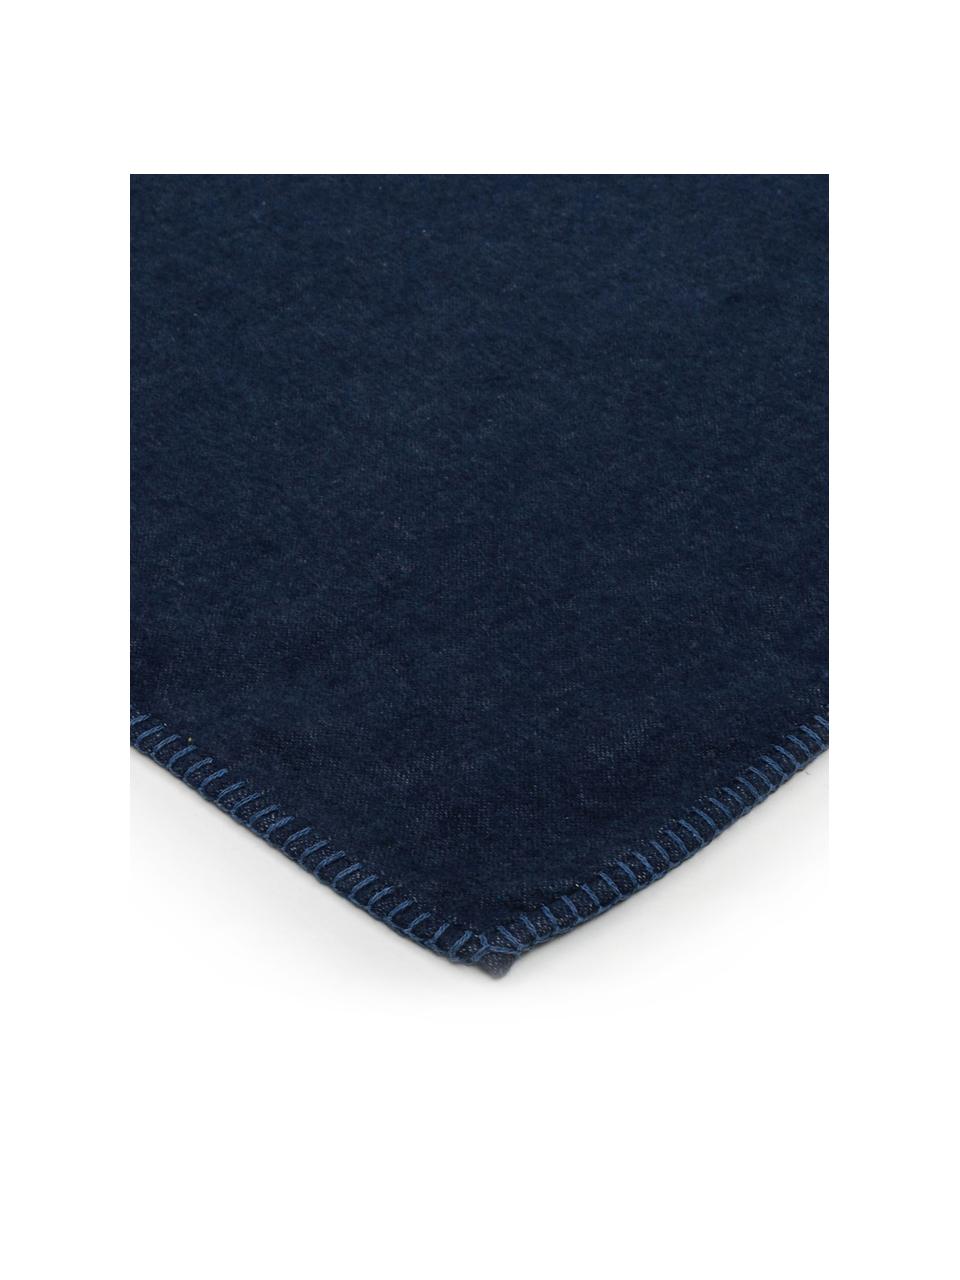 Katoenen flanellen plaid Sylt marineblauw met sierstiksels, Weeftechniek: jacquard, Marineblauw, B 140 x L 200 cm